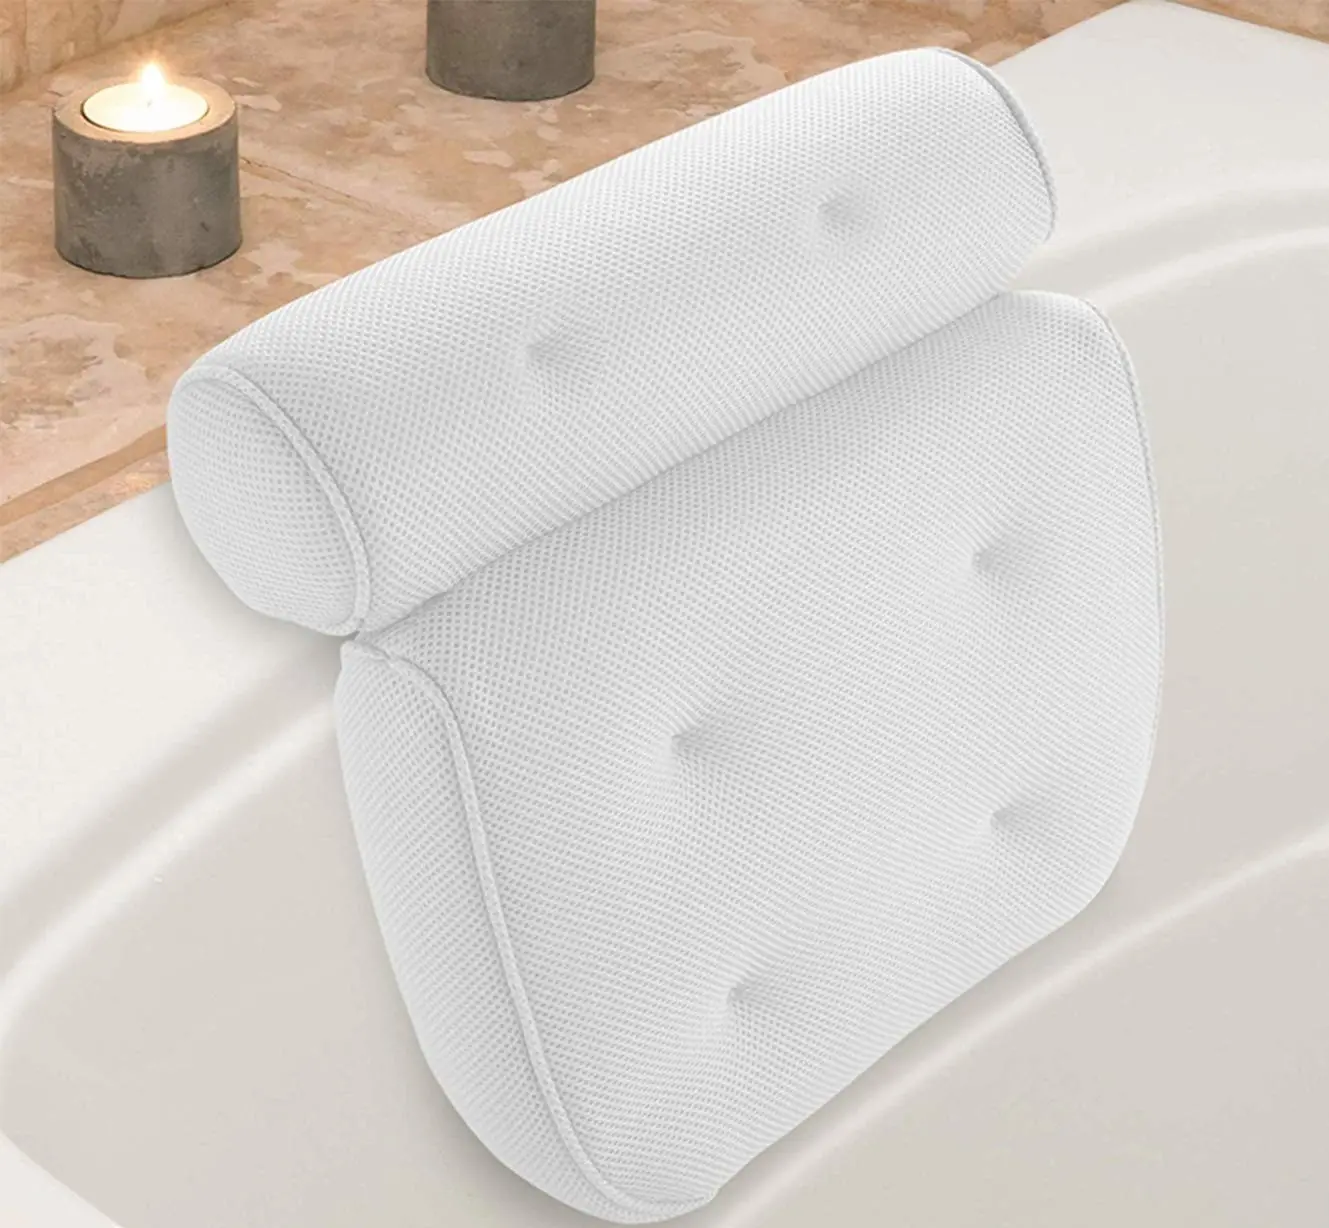 Spa bath pillow  mesh bath pillow with 4 OR 6 suctions cup bath tub pillow in bathroom